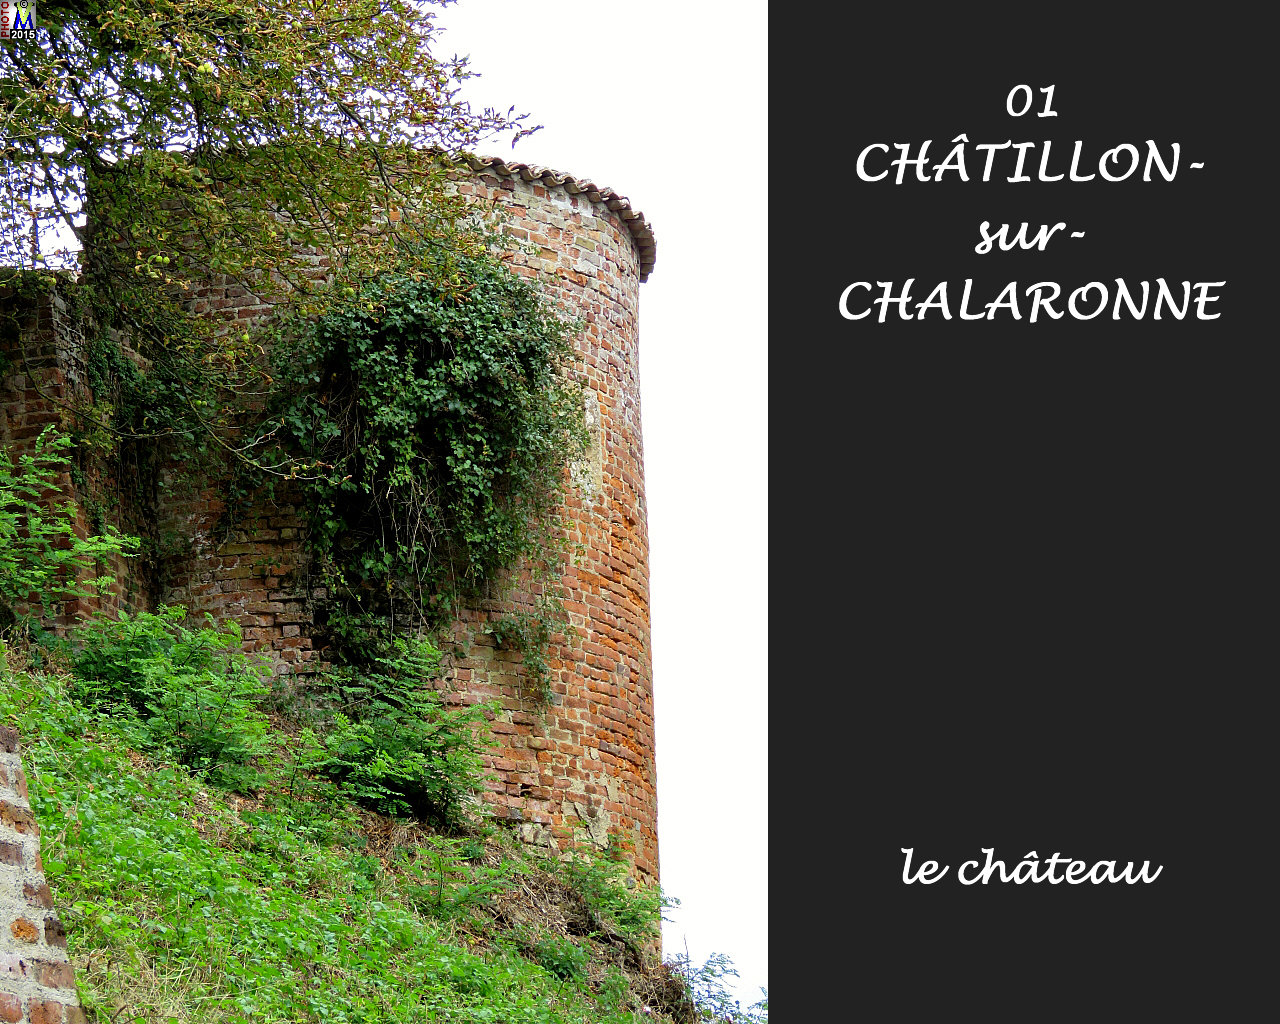 01CHATILLON-CHALARONNE_chateau_108.jpg